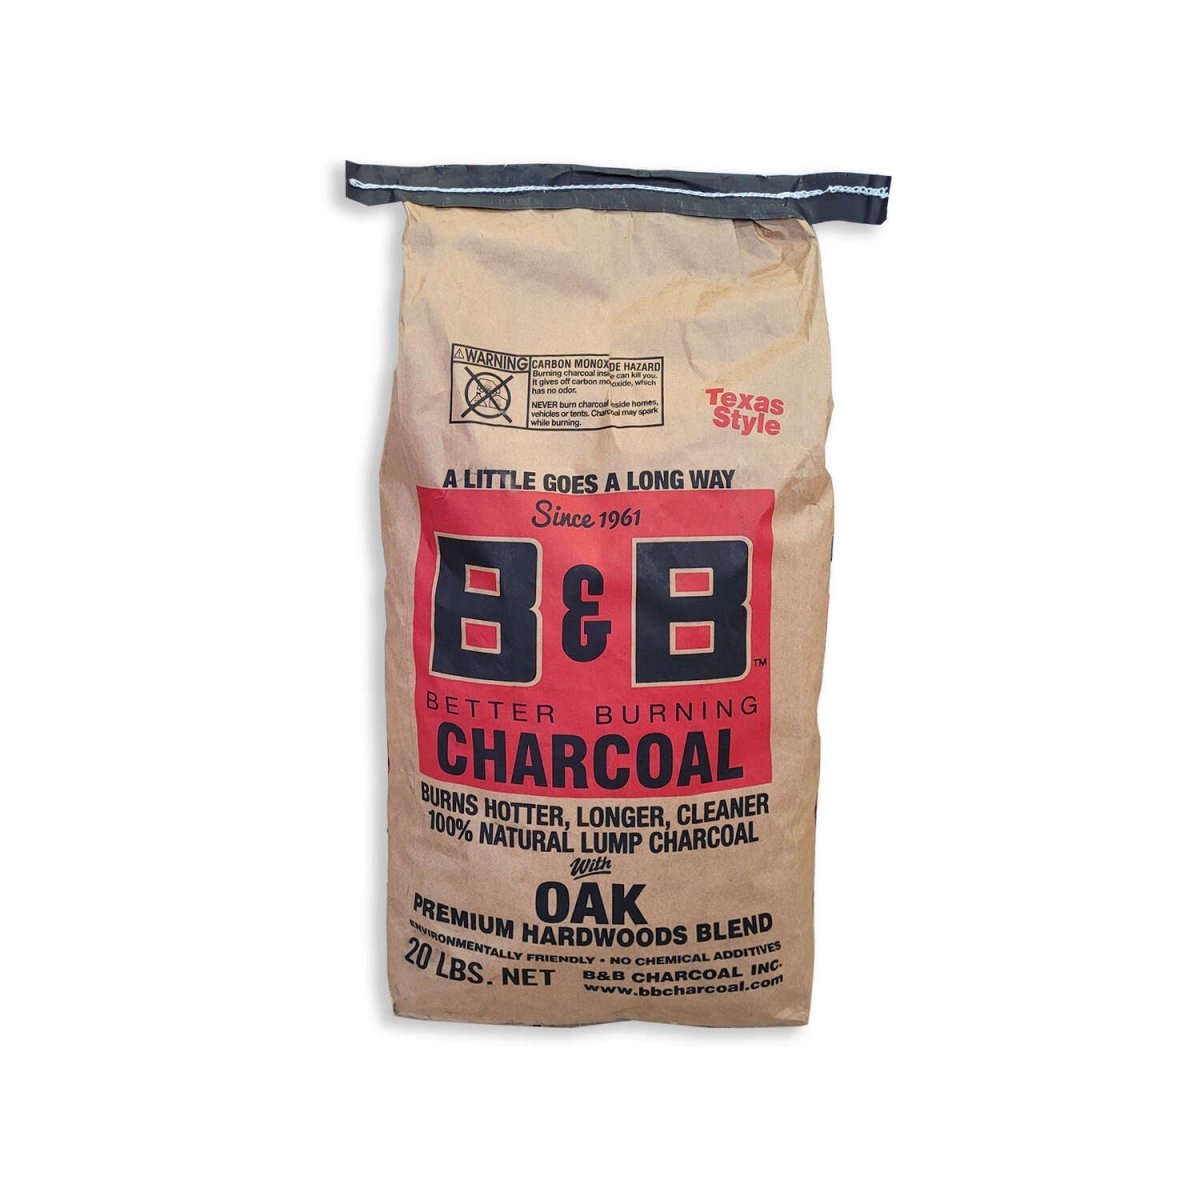 BB Charcoal Oak Lump Charcoal 20 lbs. - Texas Star Grill Shop B00042